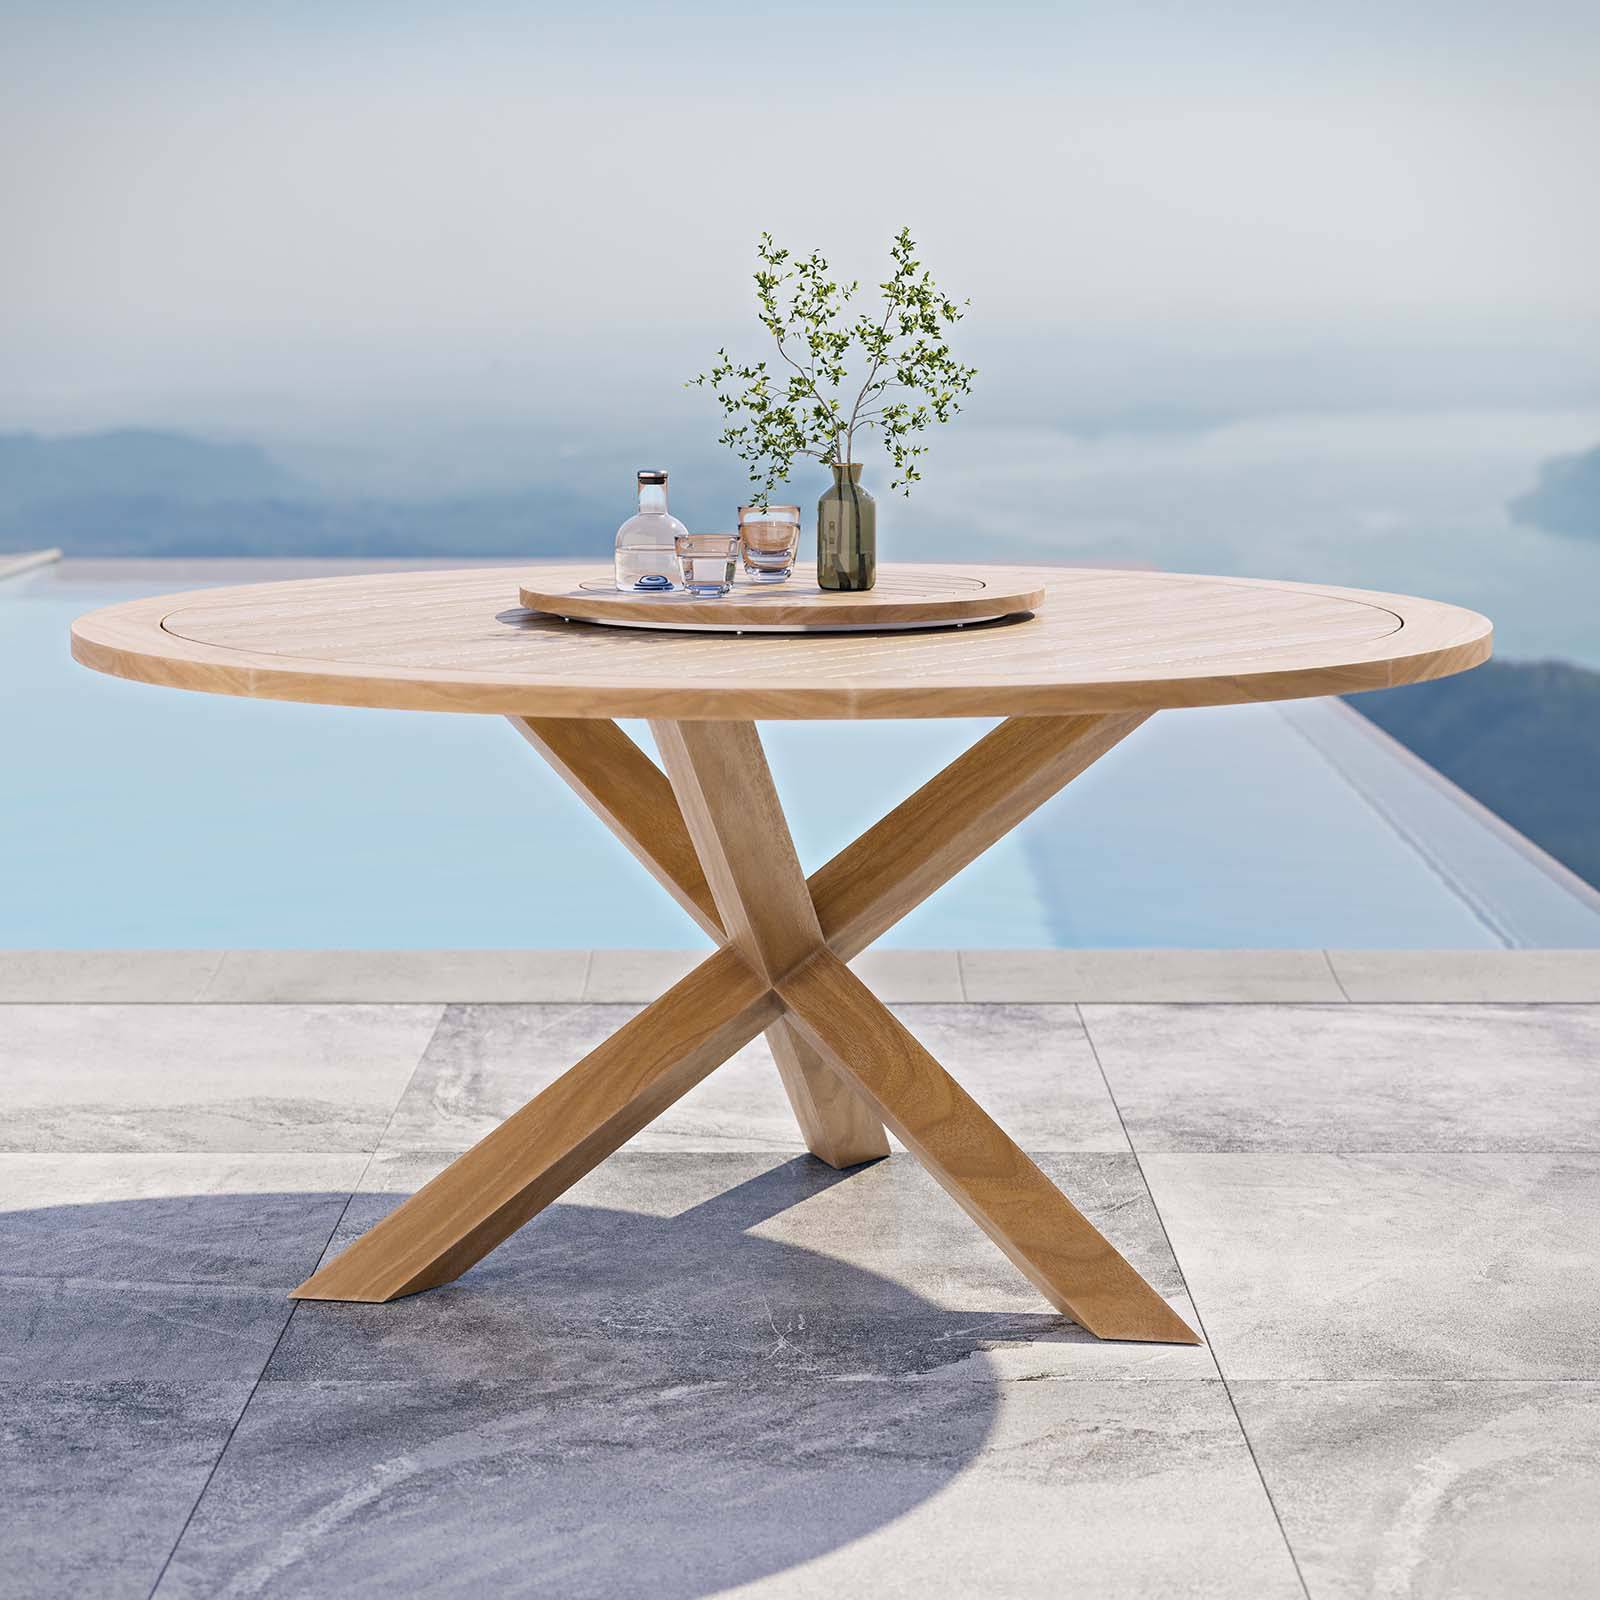 Brest Outdoor Patio Teak Wood Dining Table - Elite Maison